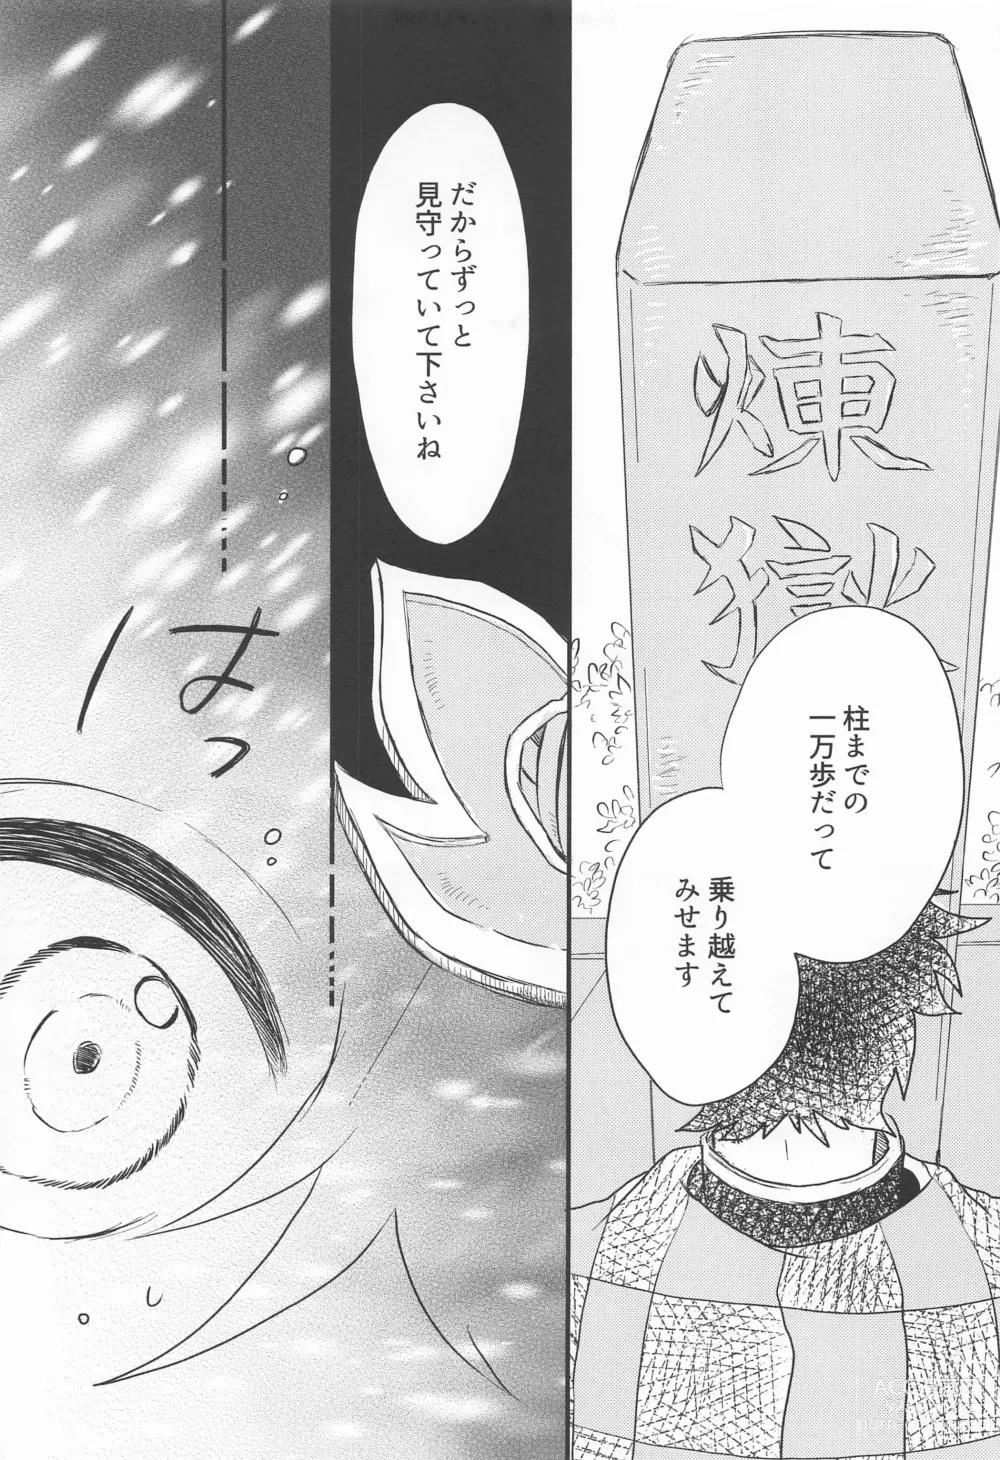 Page 16 of doujinshi Madogiwa no Rinjin To Fuyu no Hi